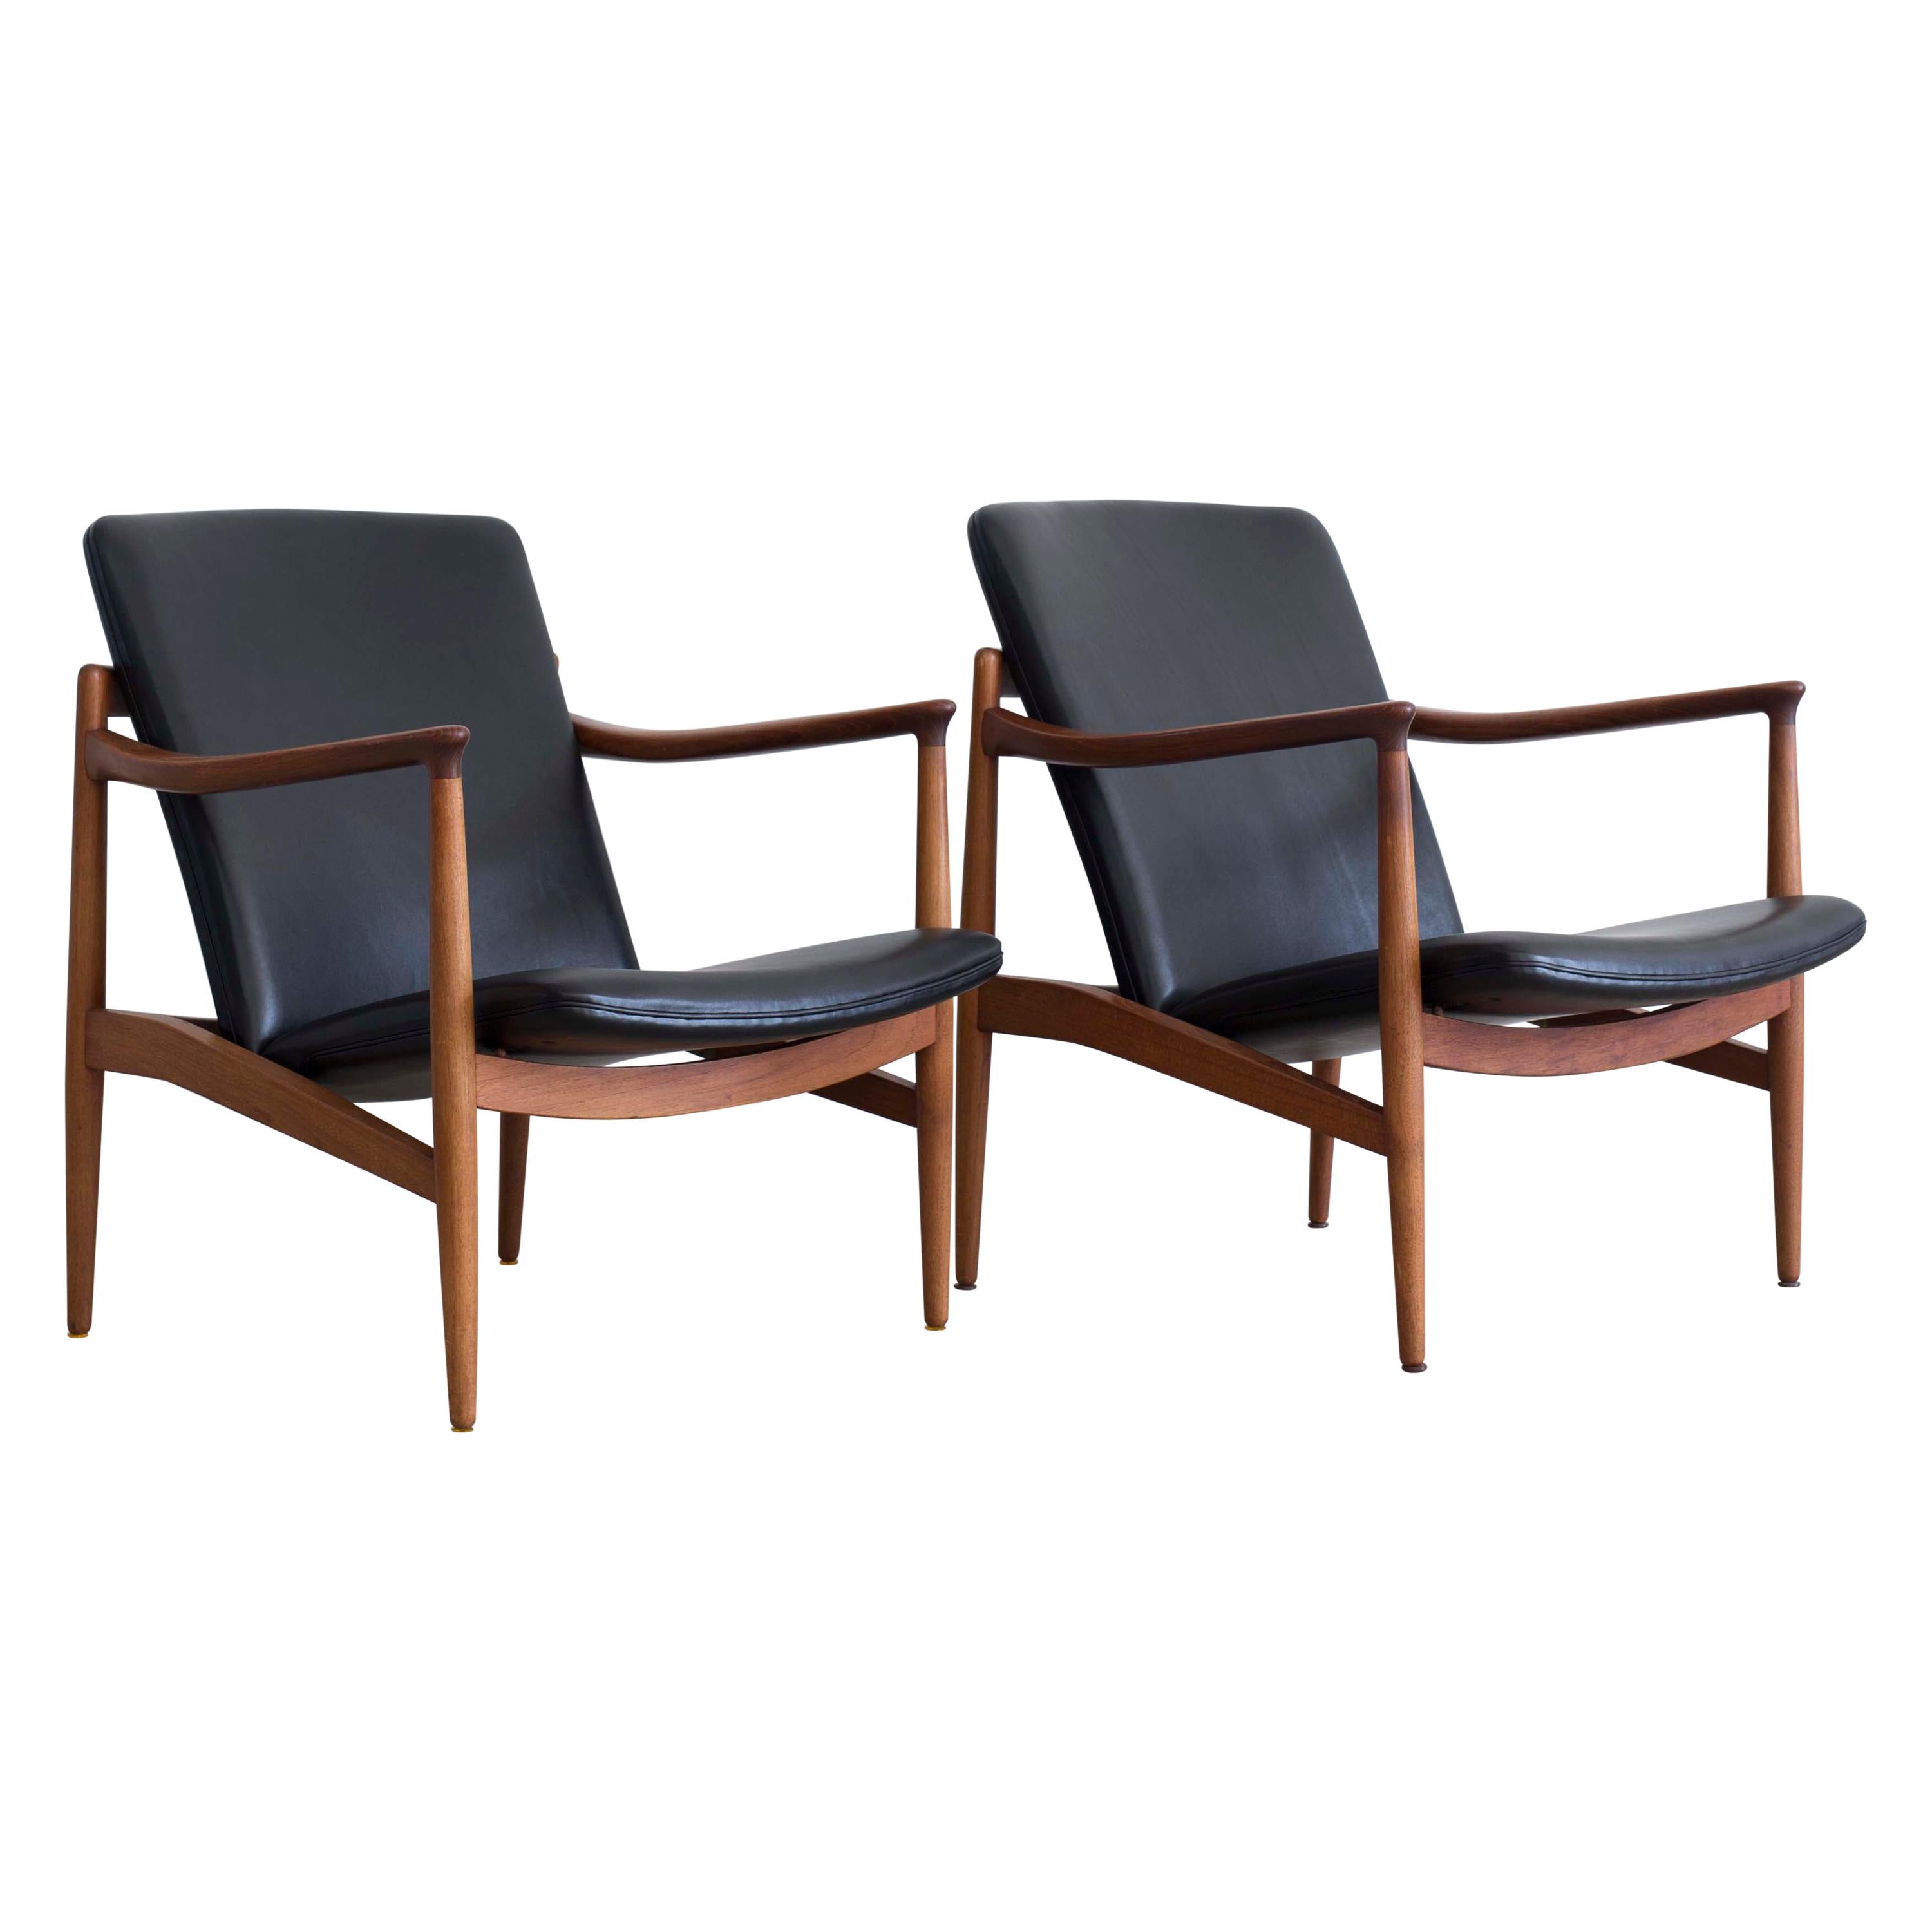 Pair of Jacob Kjaer Easy Chairs, 1954